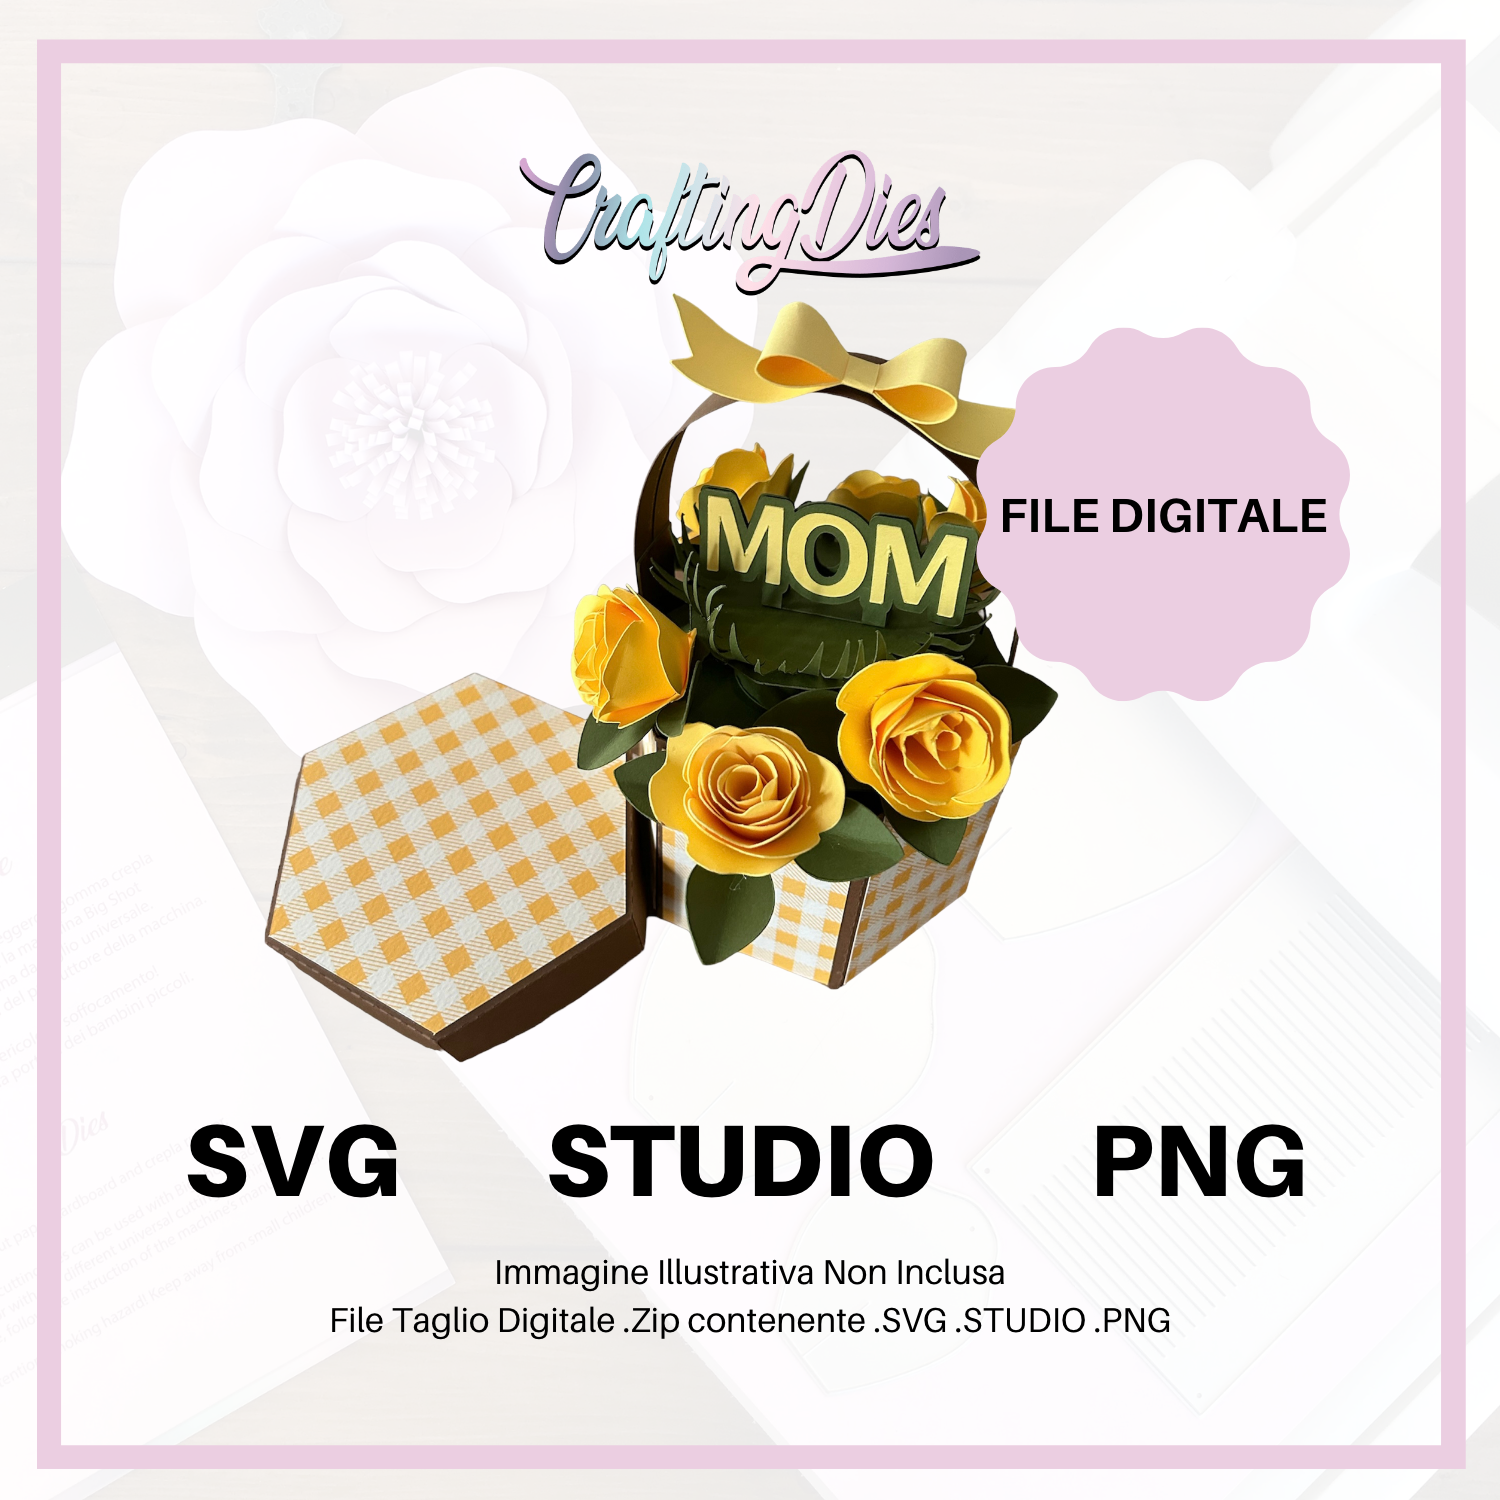 Scatola Cestino Mamma Love Crafting Dies - File Taglio Digitale SVG, STUDIO, PNG